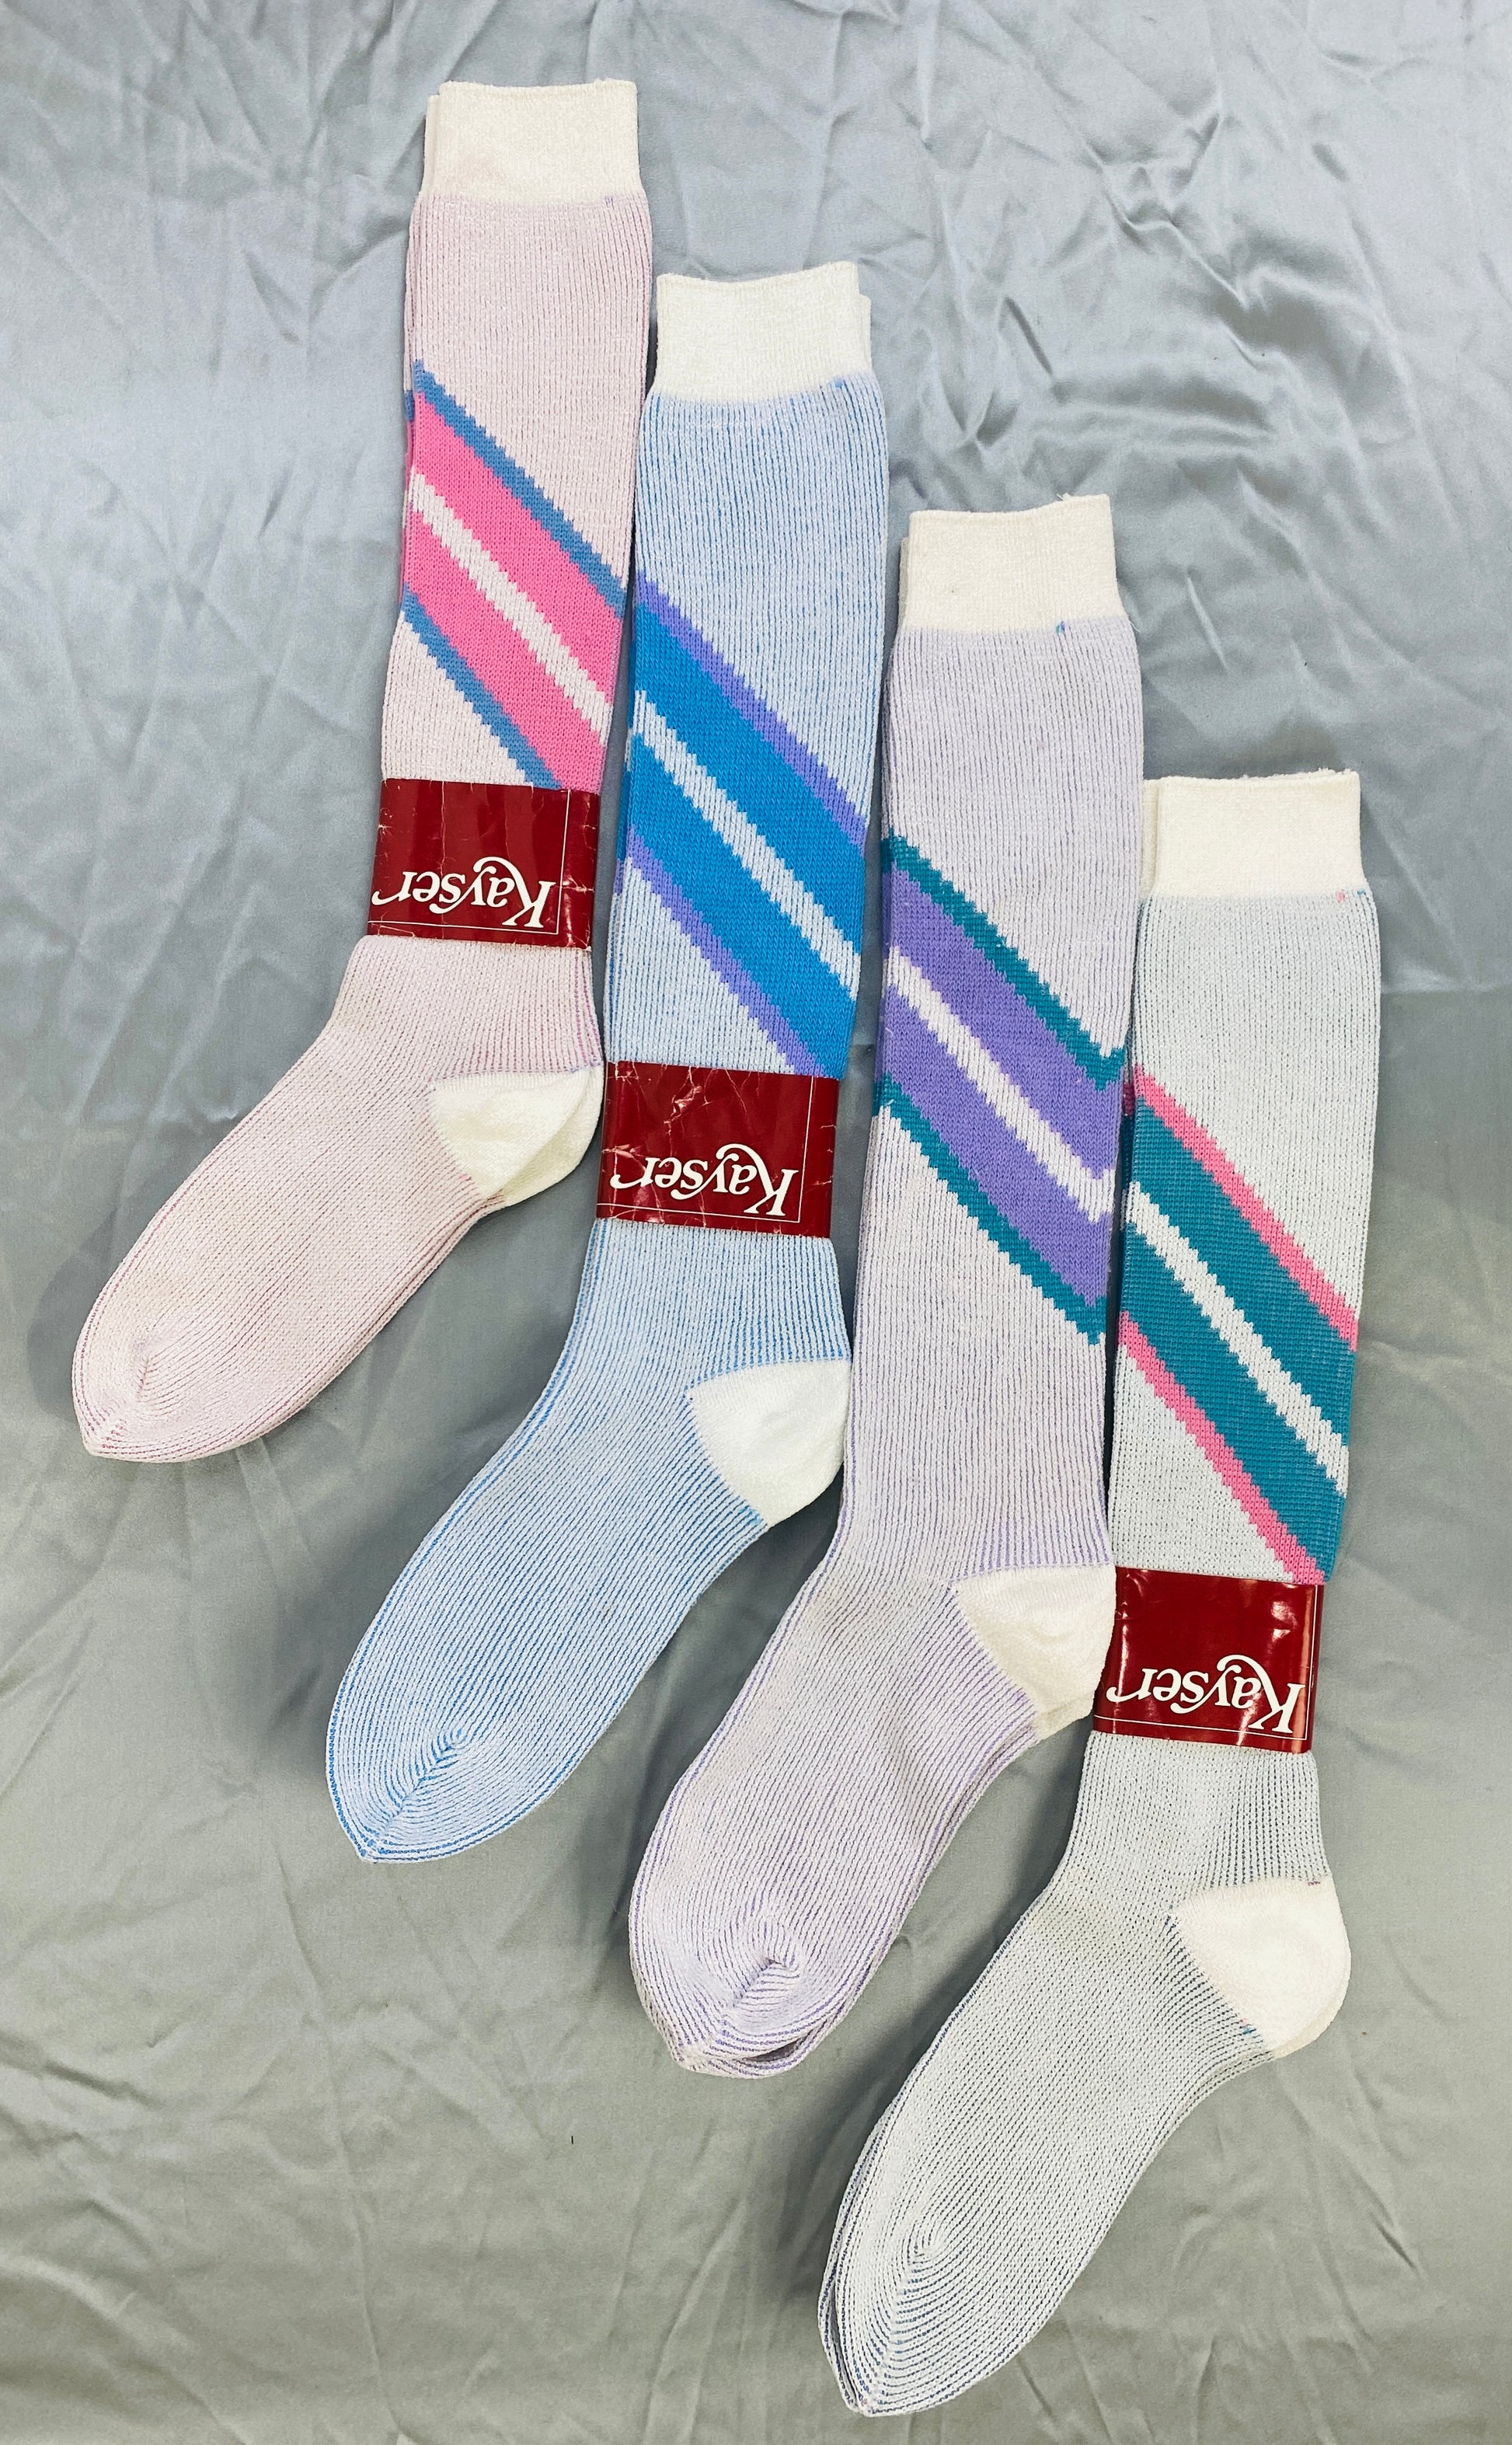 Vintage Deadstock Pastel Nylon Knee Socks with Repp Stripe, Kayser, x5